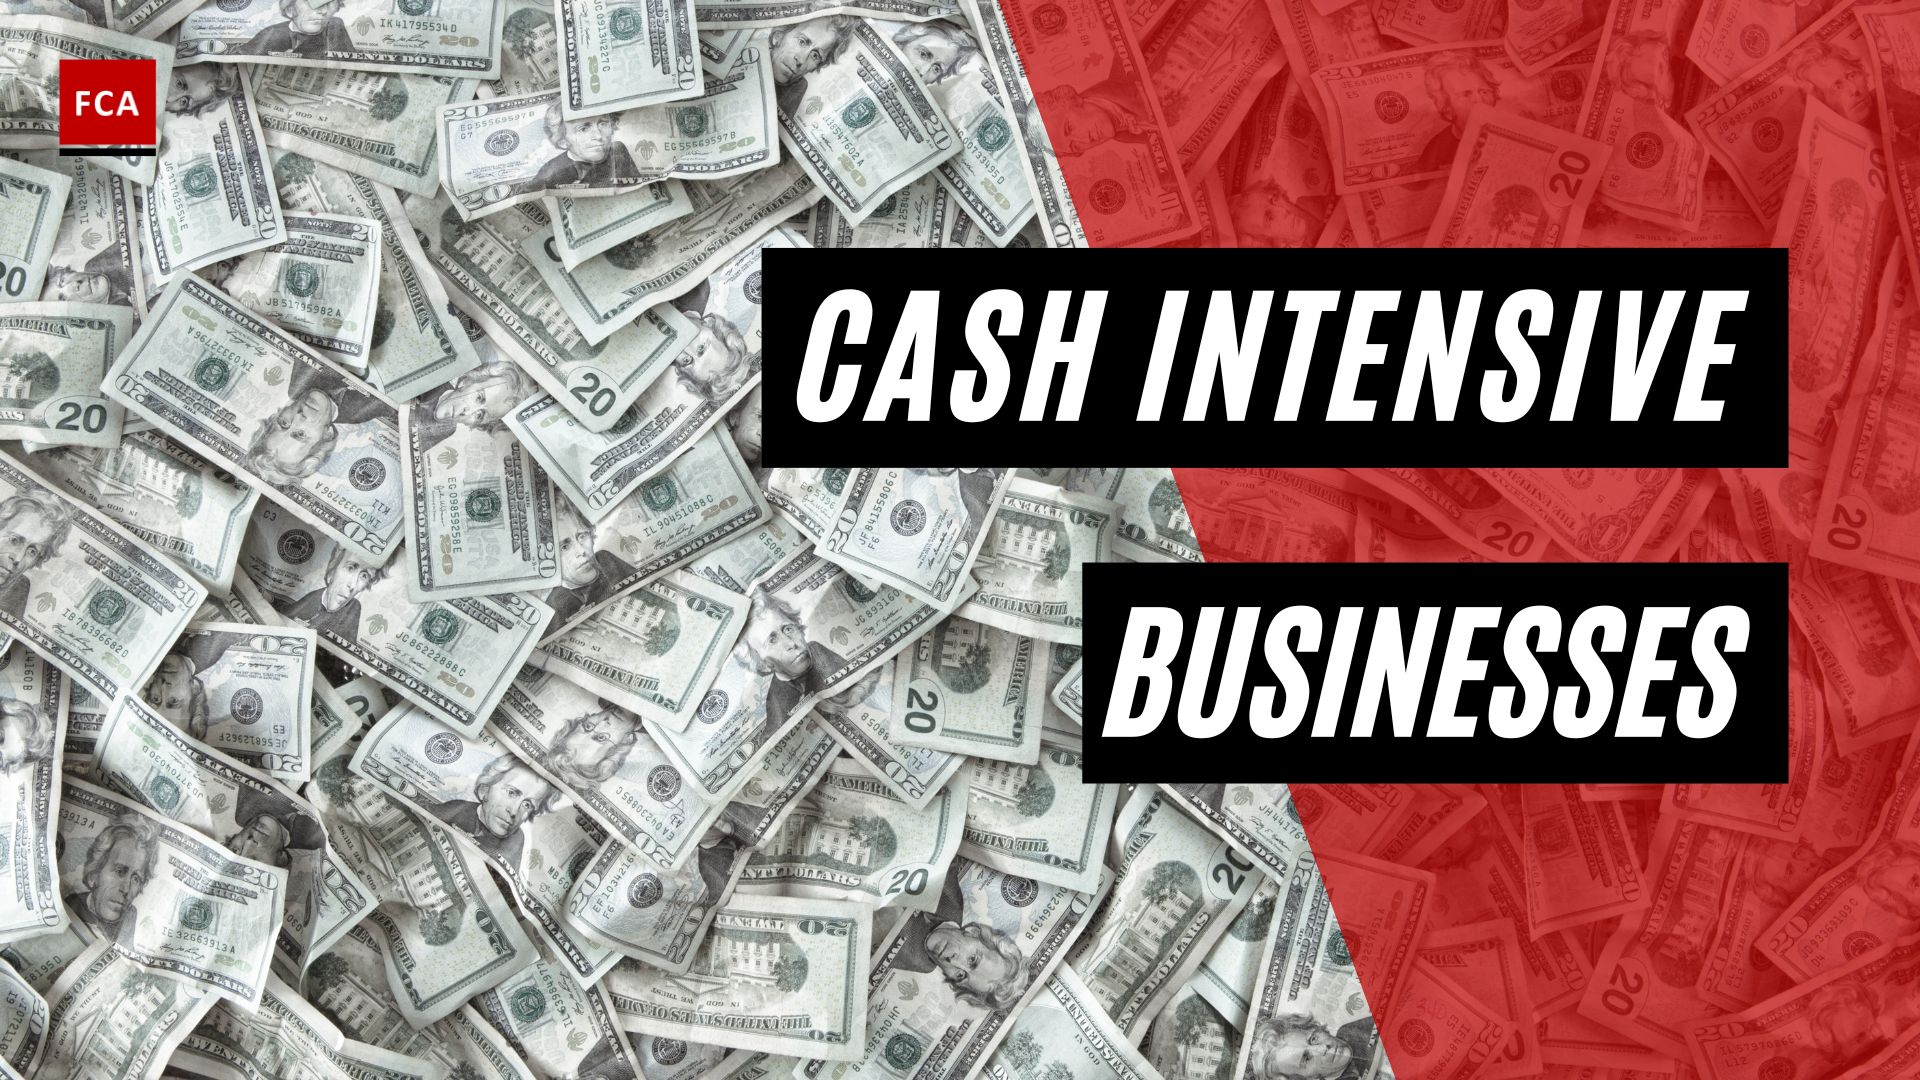 Cash Intensive Businesses